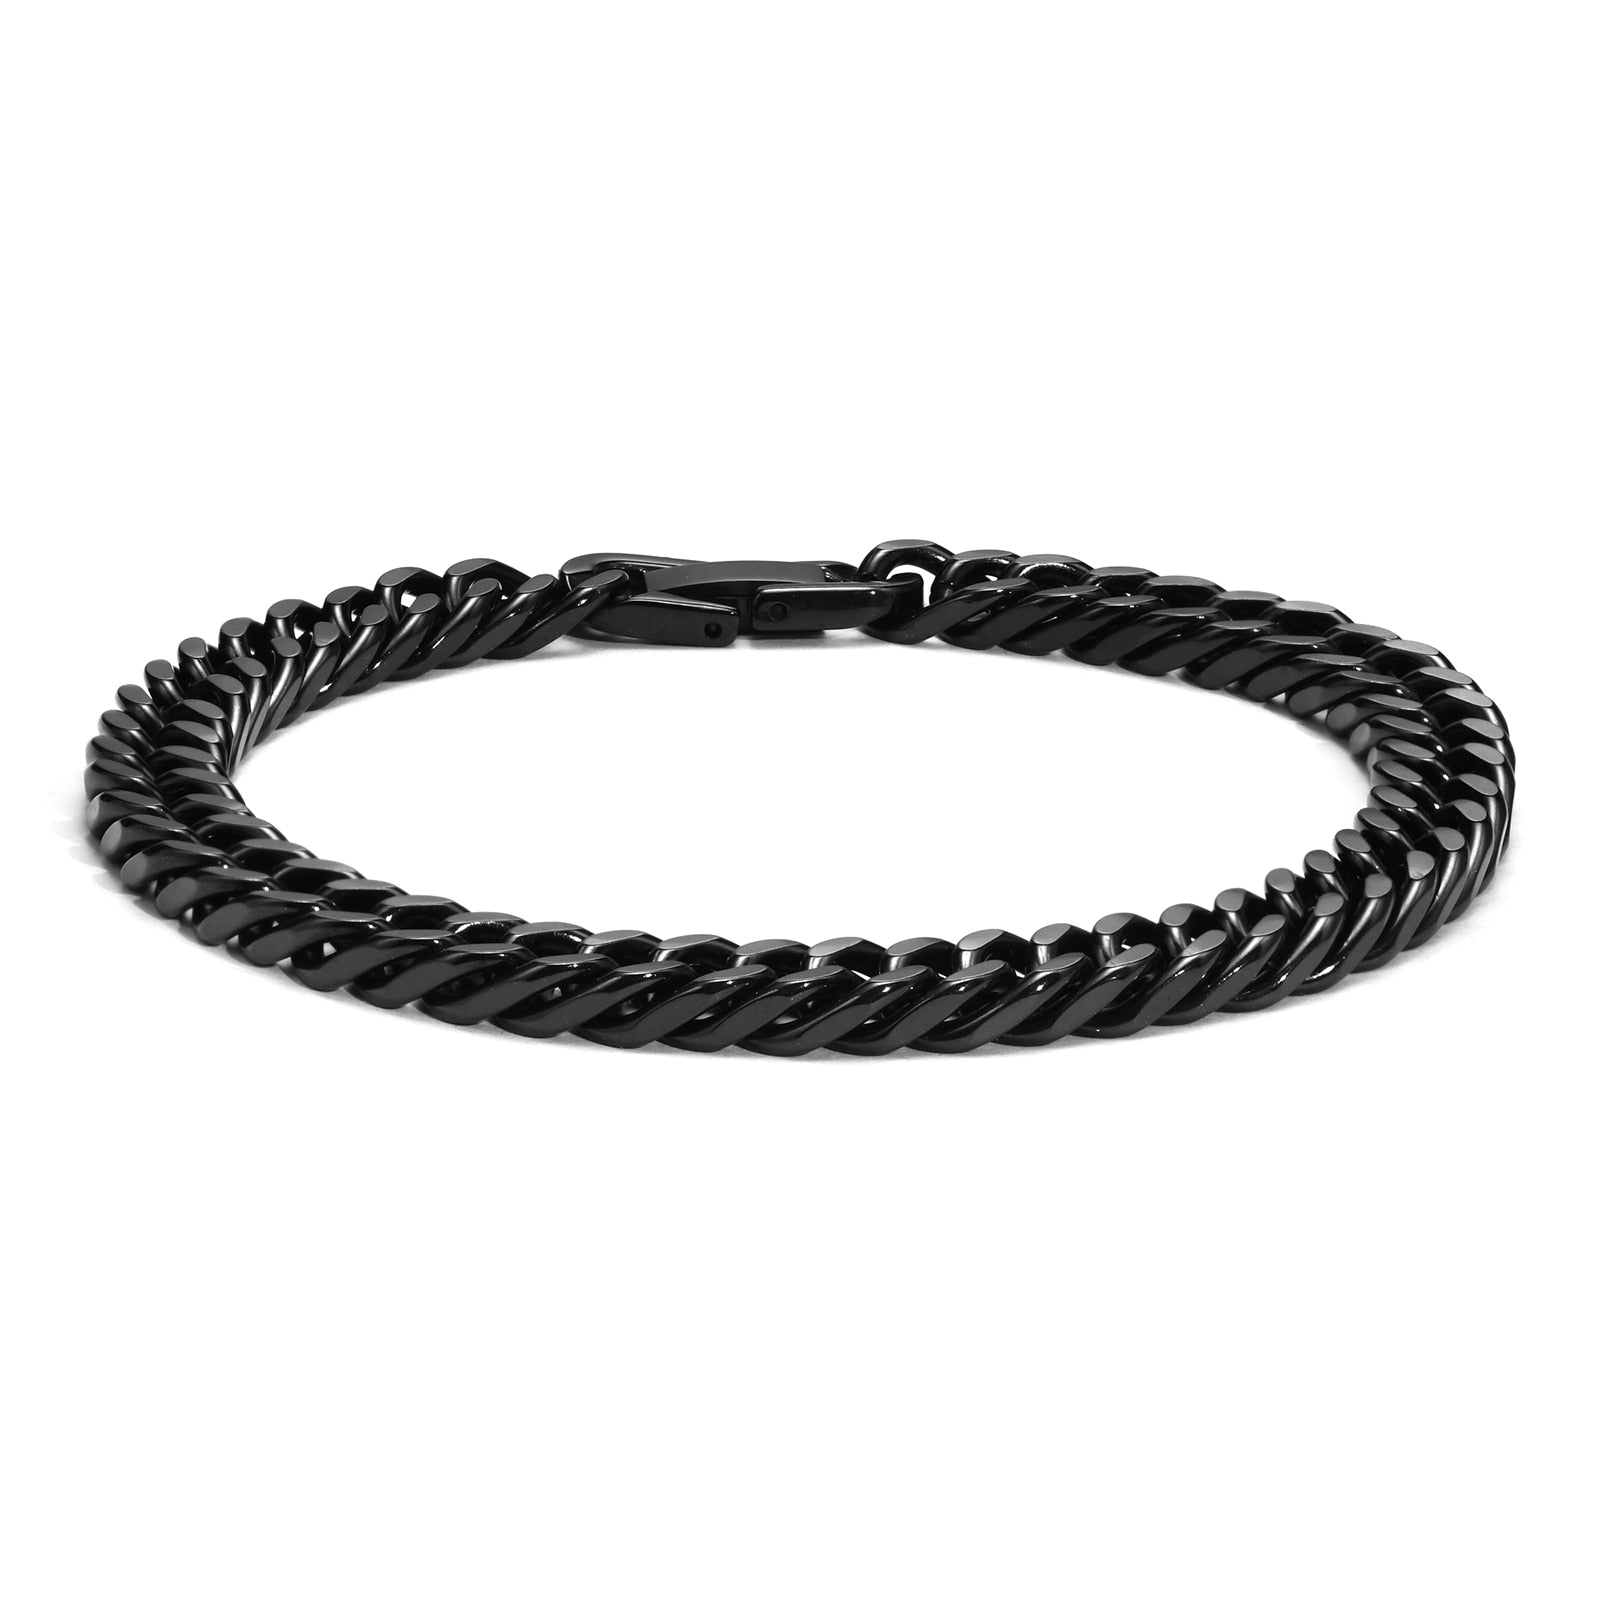 Cortez Curb Chain Bracelet - BERML BY DESIGN JEWELRY FOR MEN